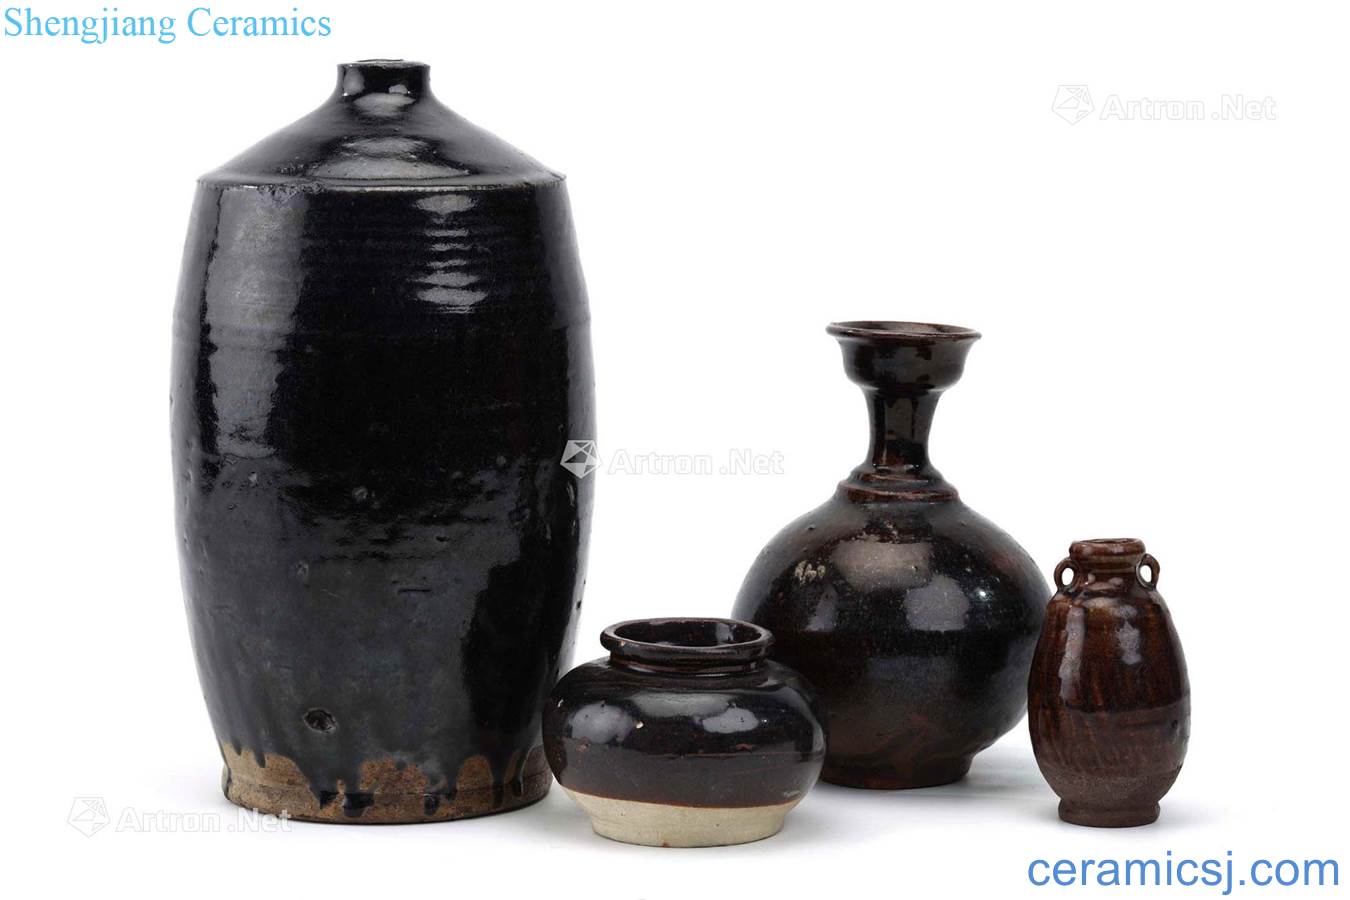 Yuan or after Sauce glaze pottery (four pieces)